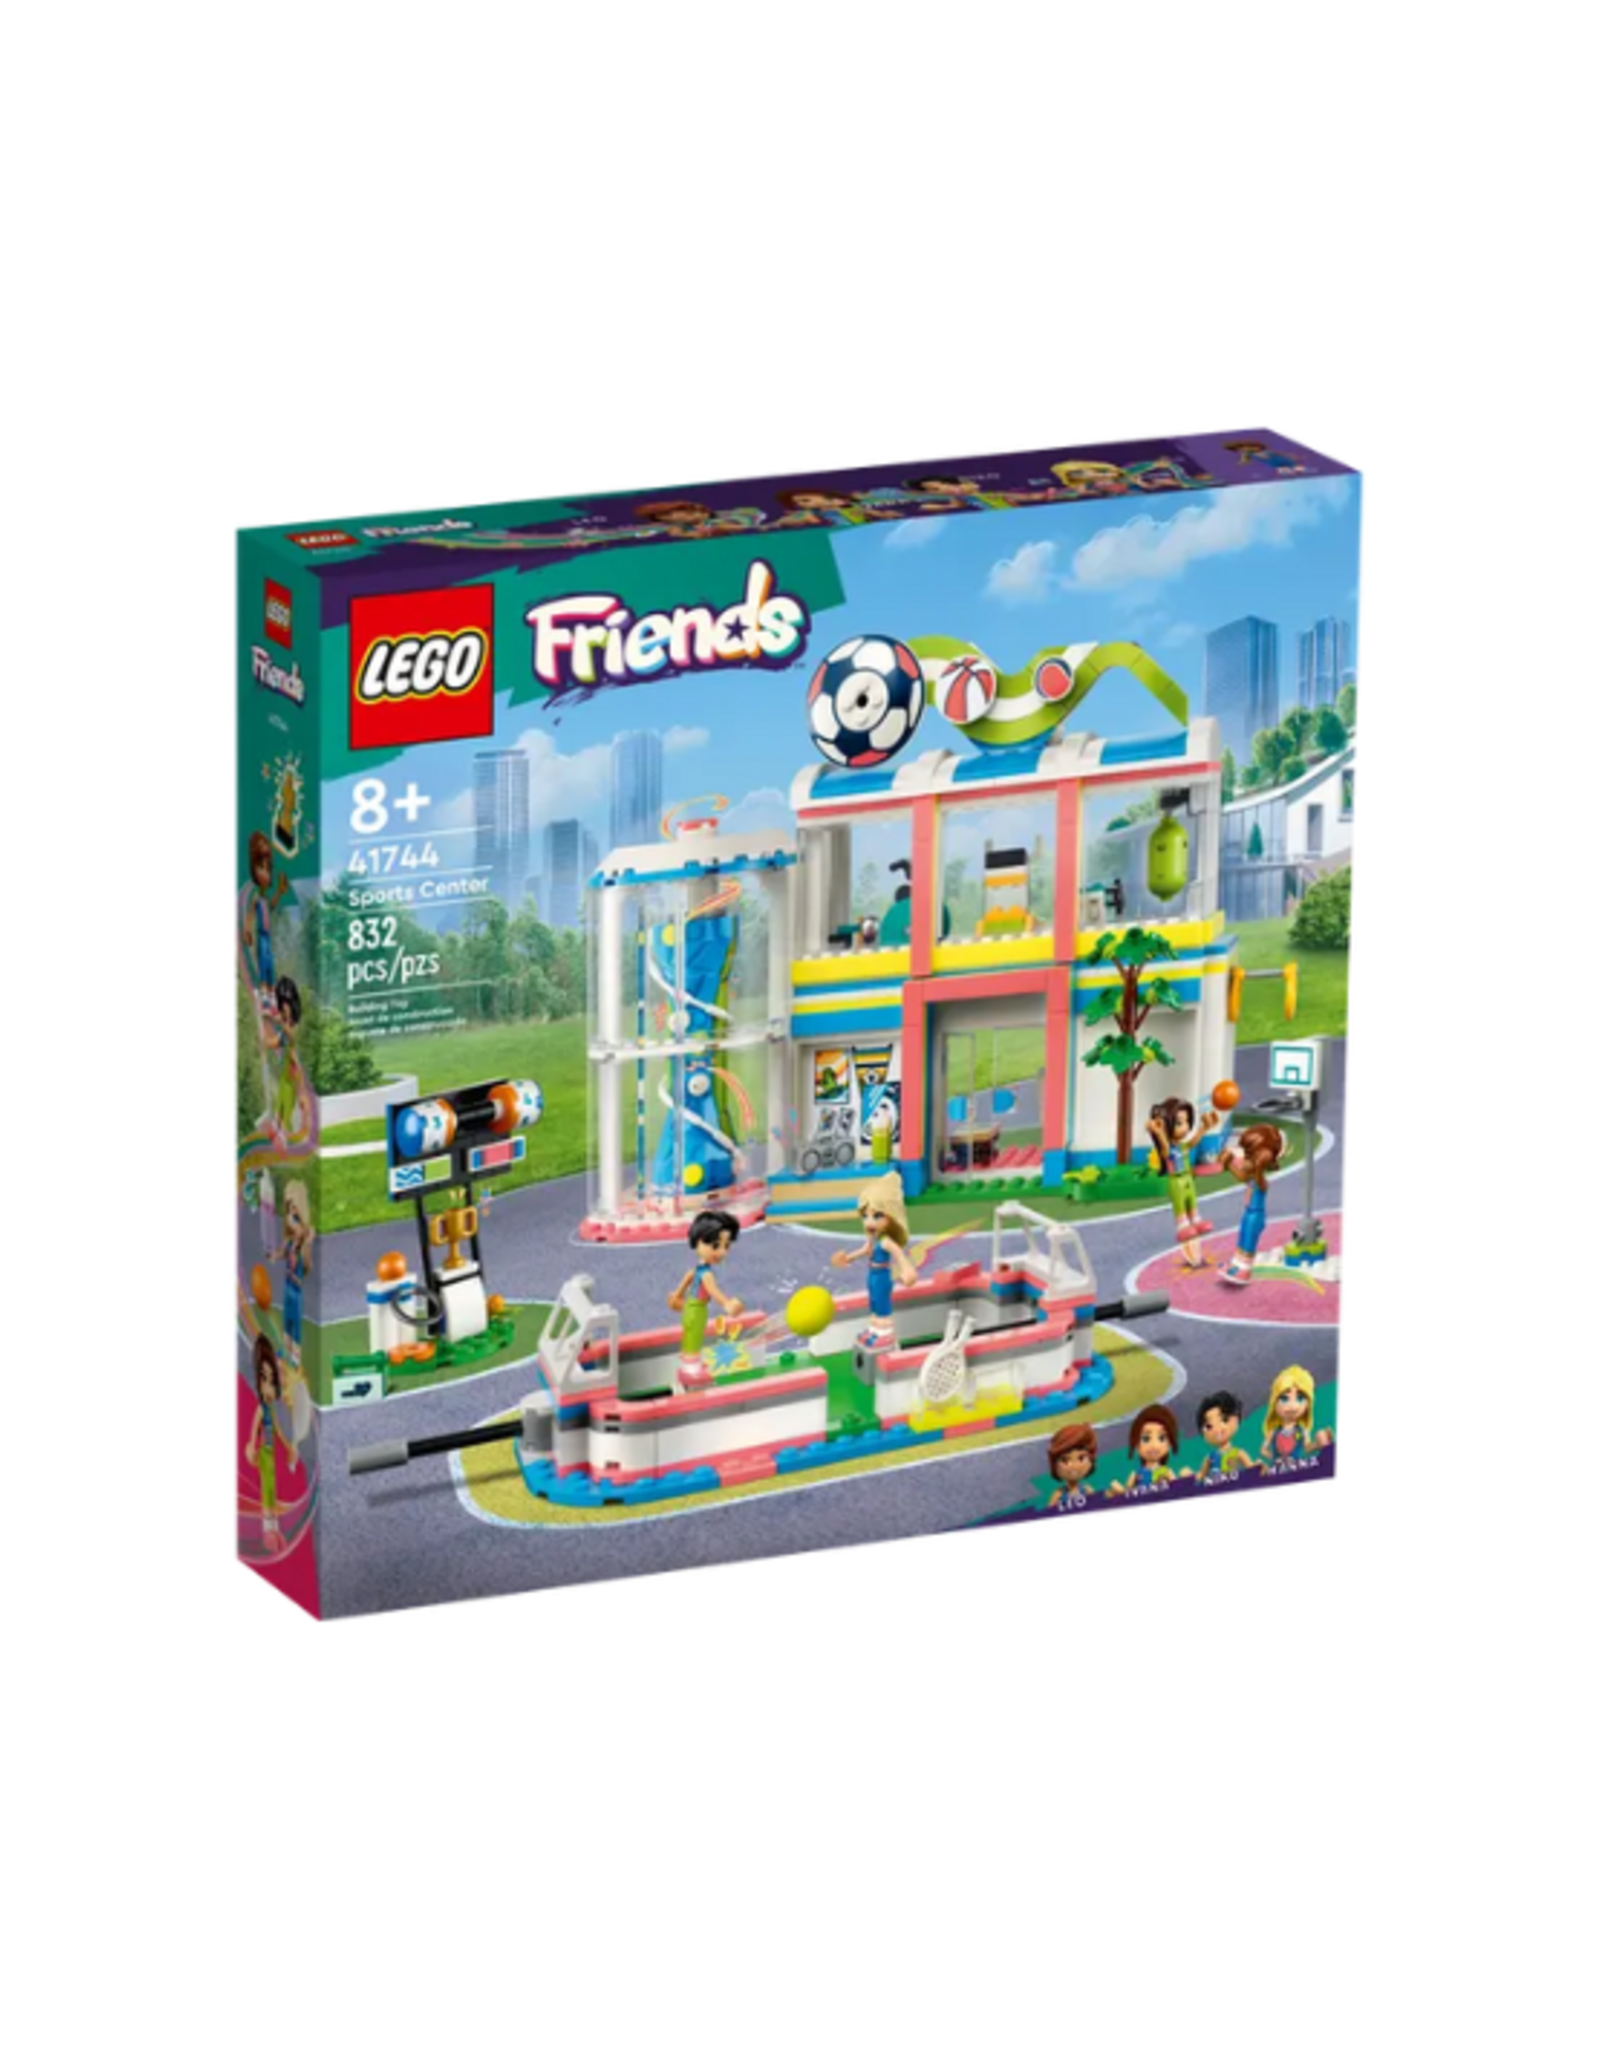 Lego Lego - Friends - 41744 - Sports Center